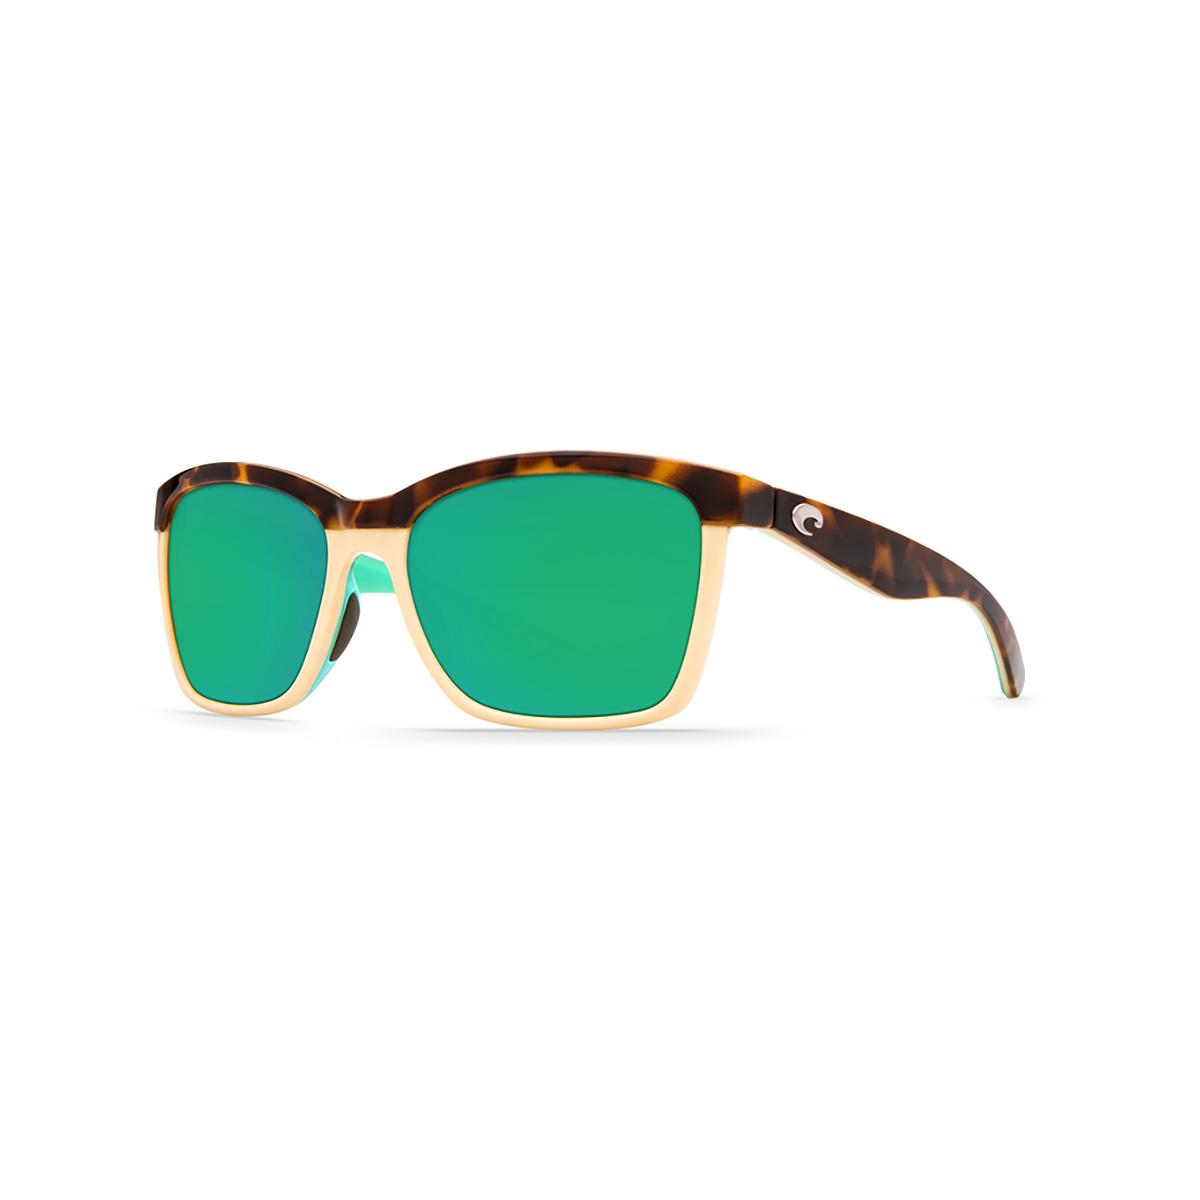  Anaa 580p Sunglasses - Polarized Plastic